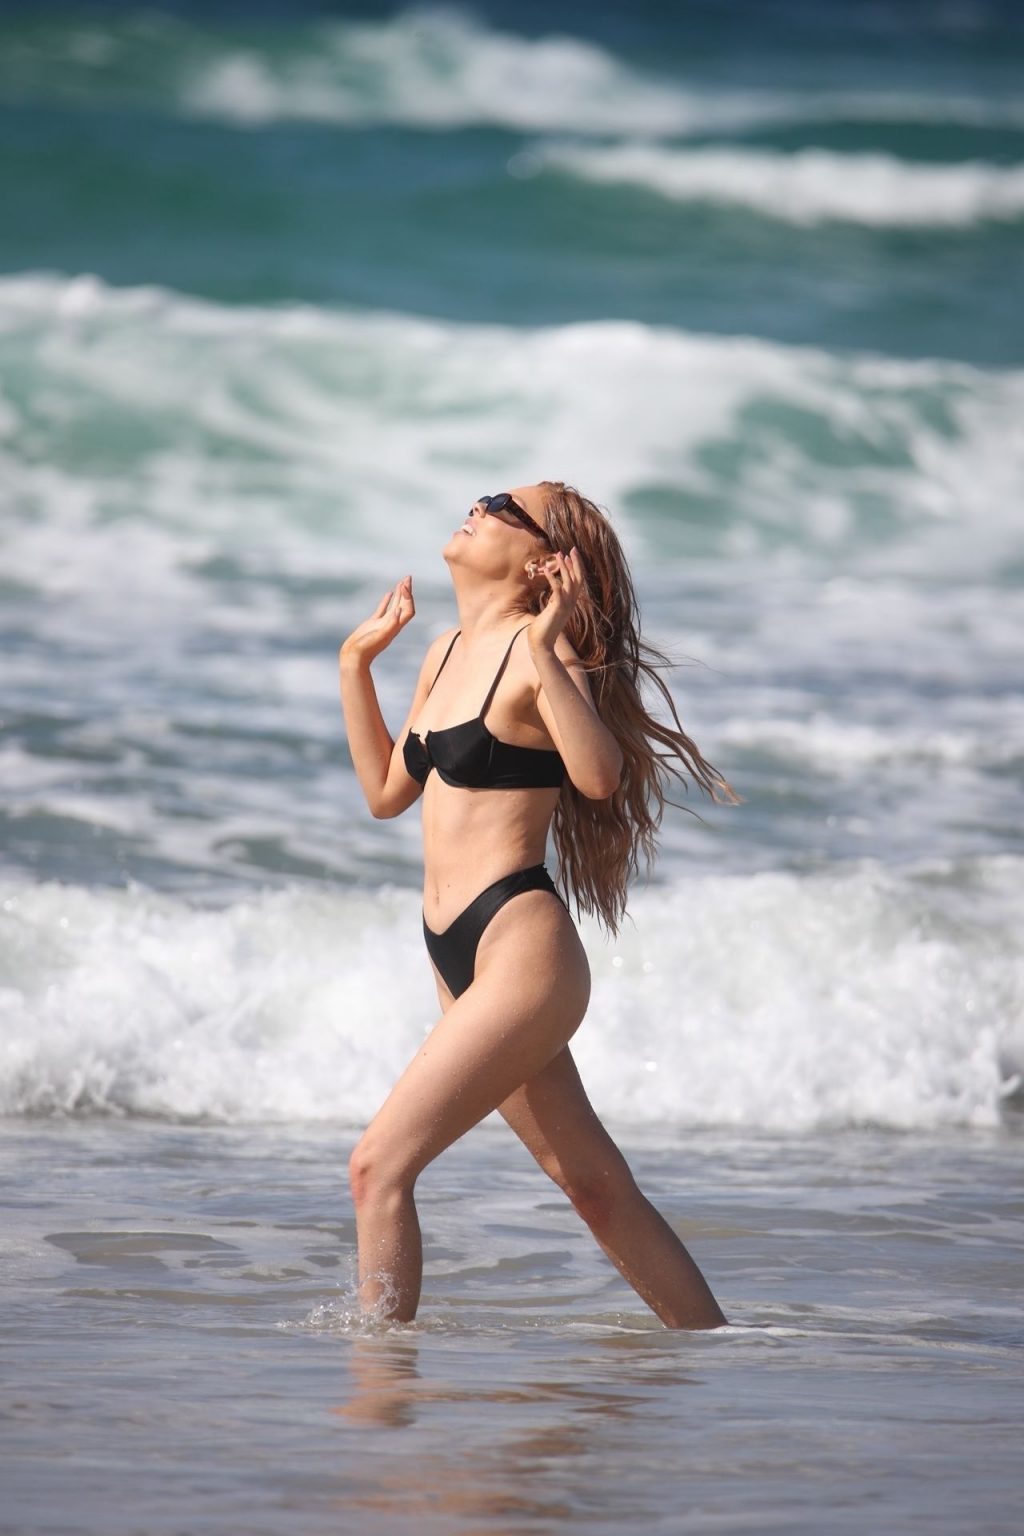 Zoe-Clare McDonald Shows Off Her Bikini Body (39 Photos)